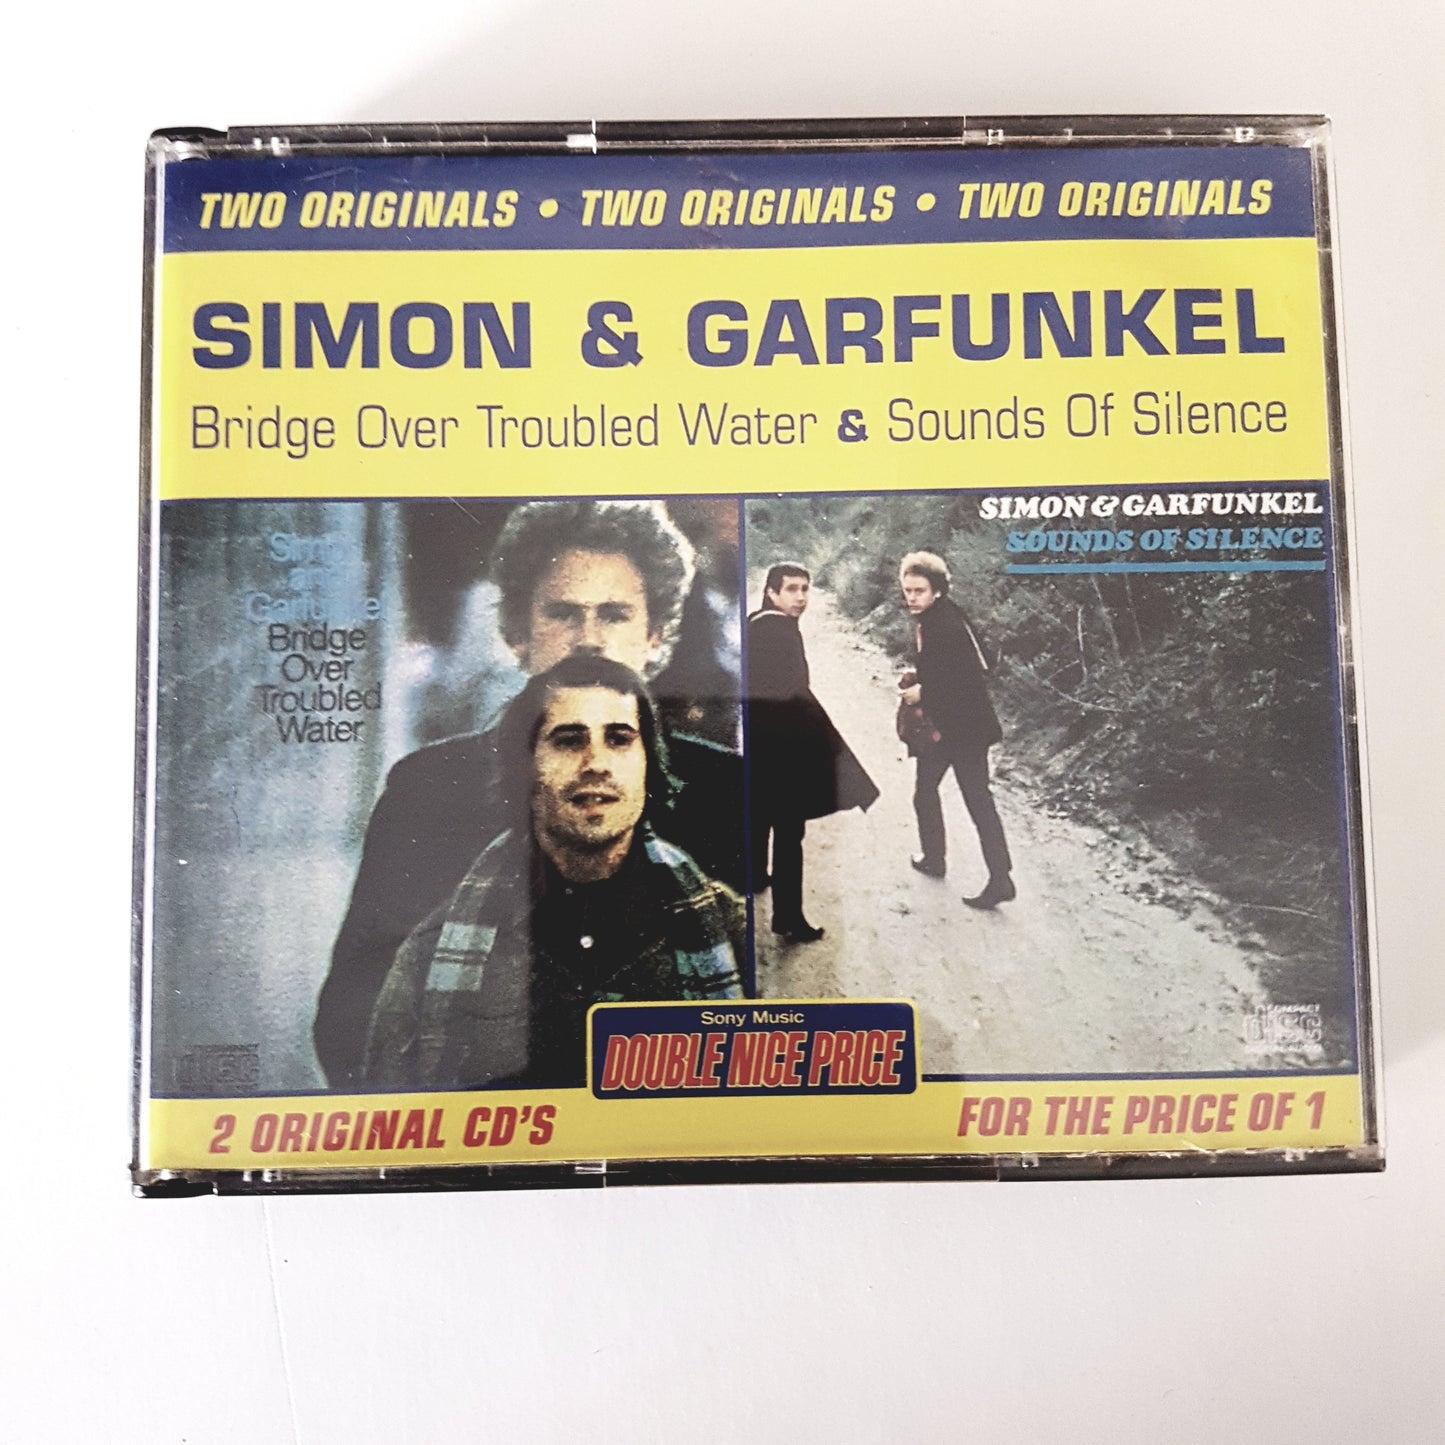 Simon & Garfunkel, Bridge Over Troubled Waters & Sounds Of Silence (2CD's)